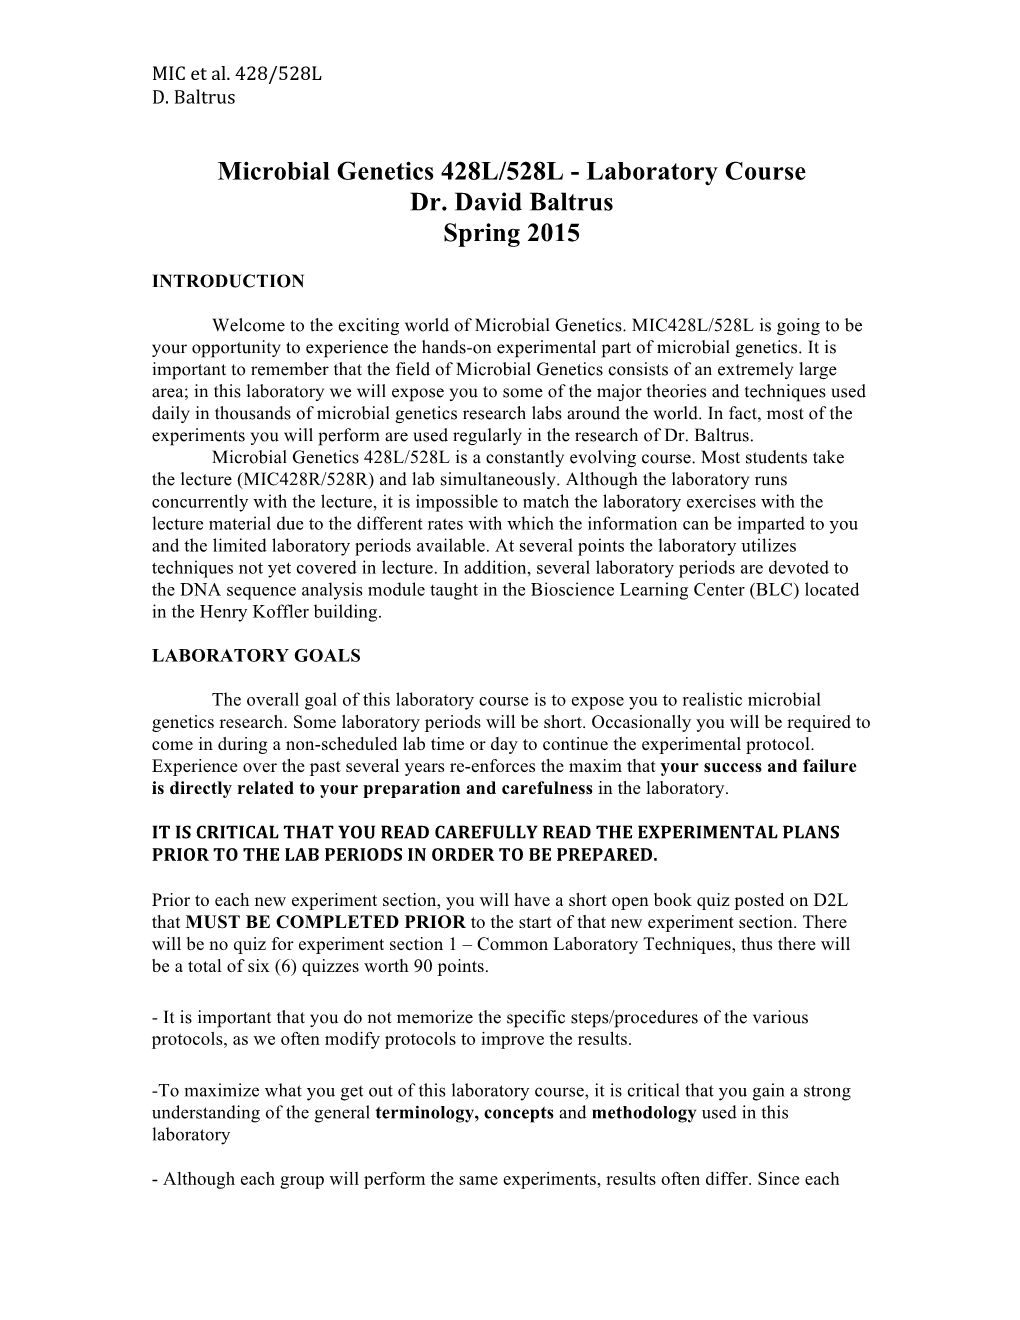 Microbial Genetics 428L/528L - Laboratory Course Dr